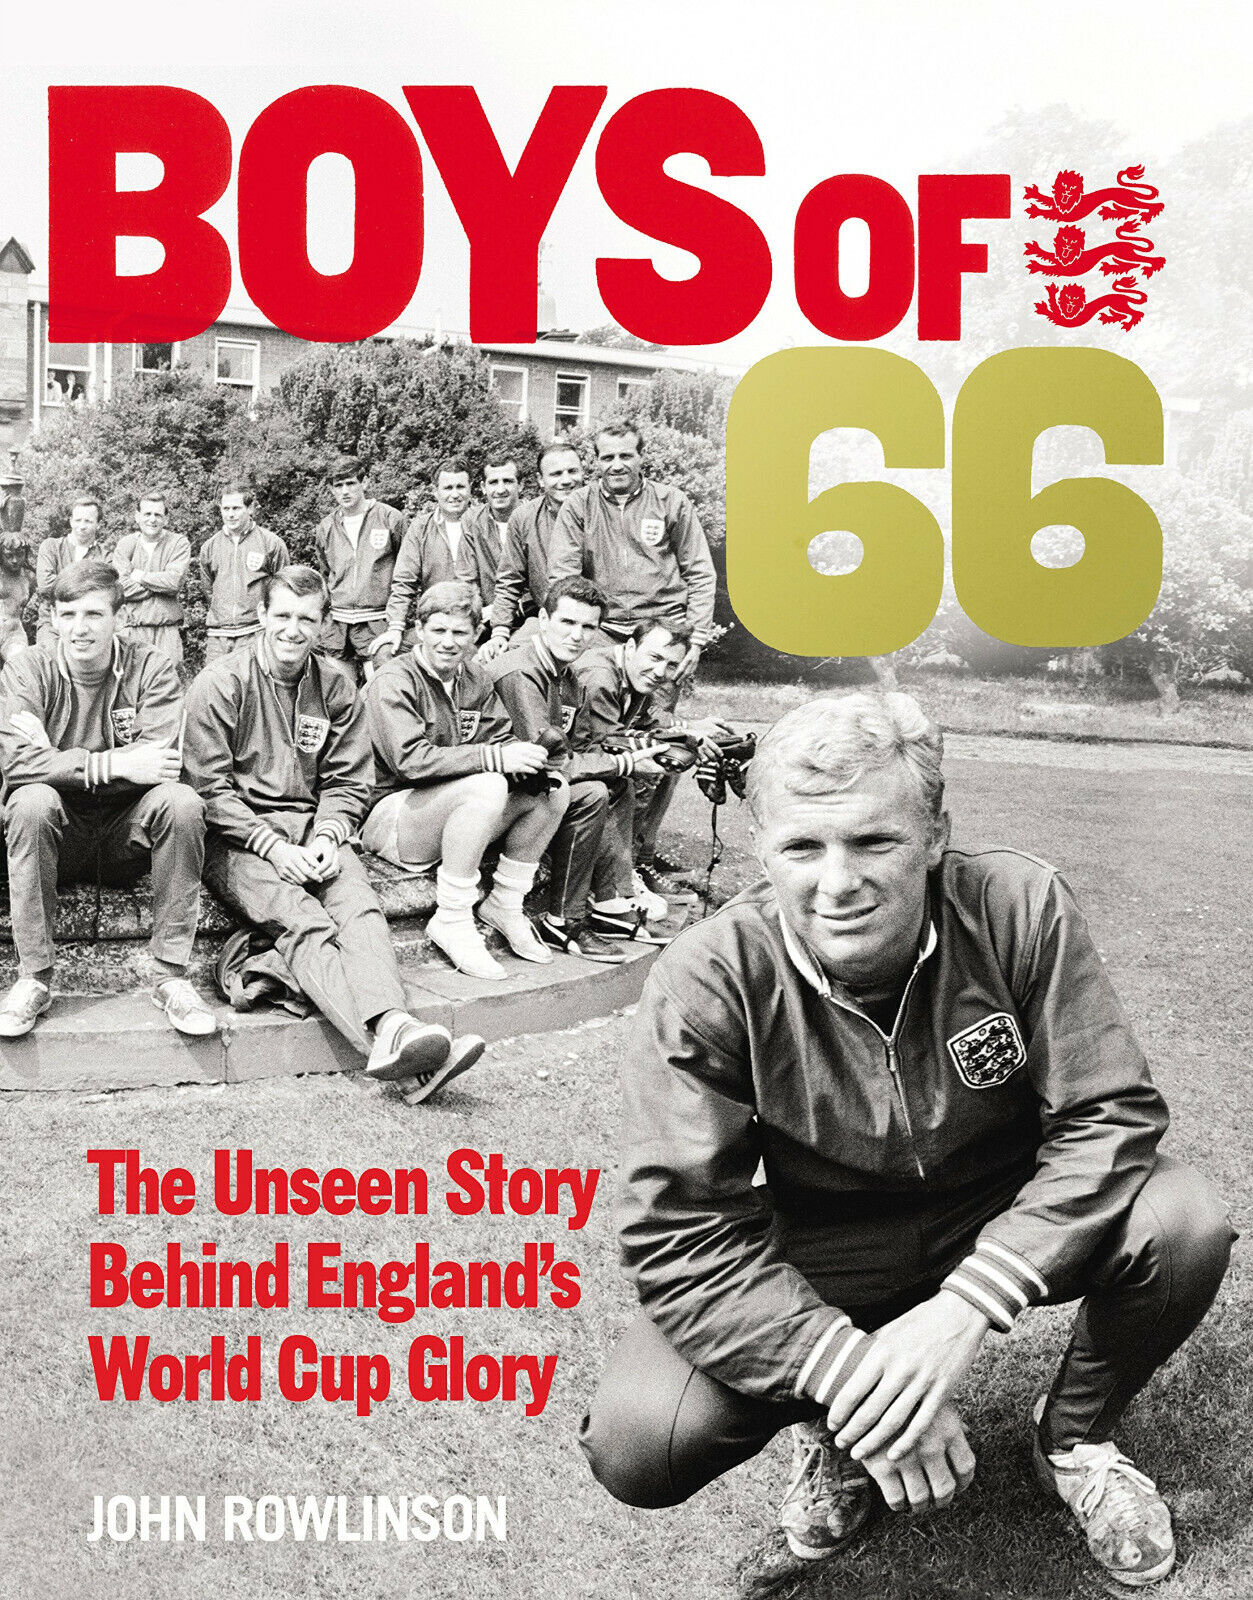 The Boys of ?66 - John Rowlinson - Ebury Publishing, 2016